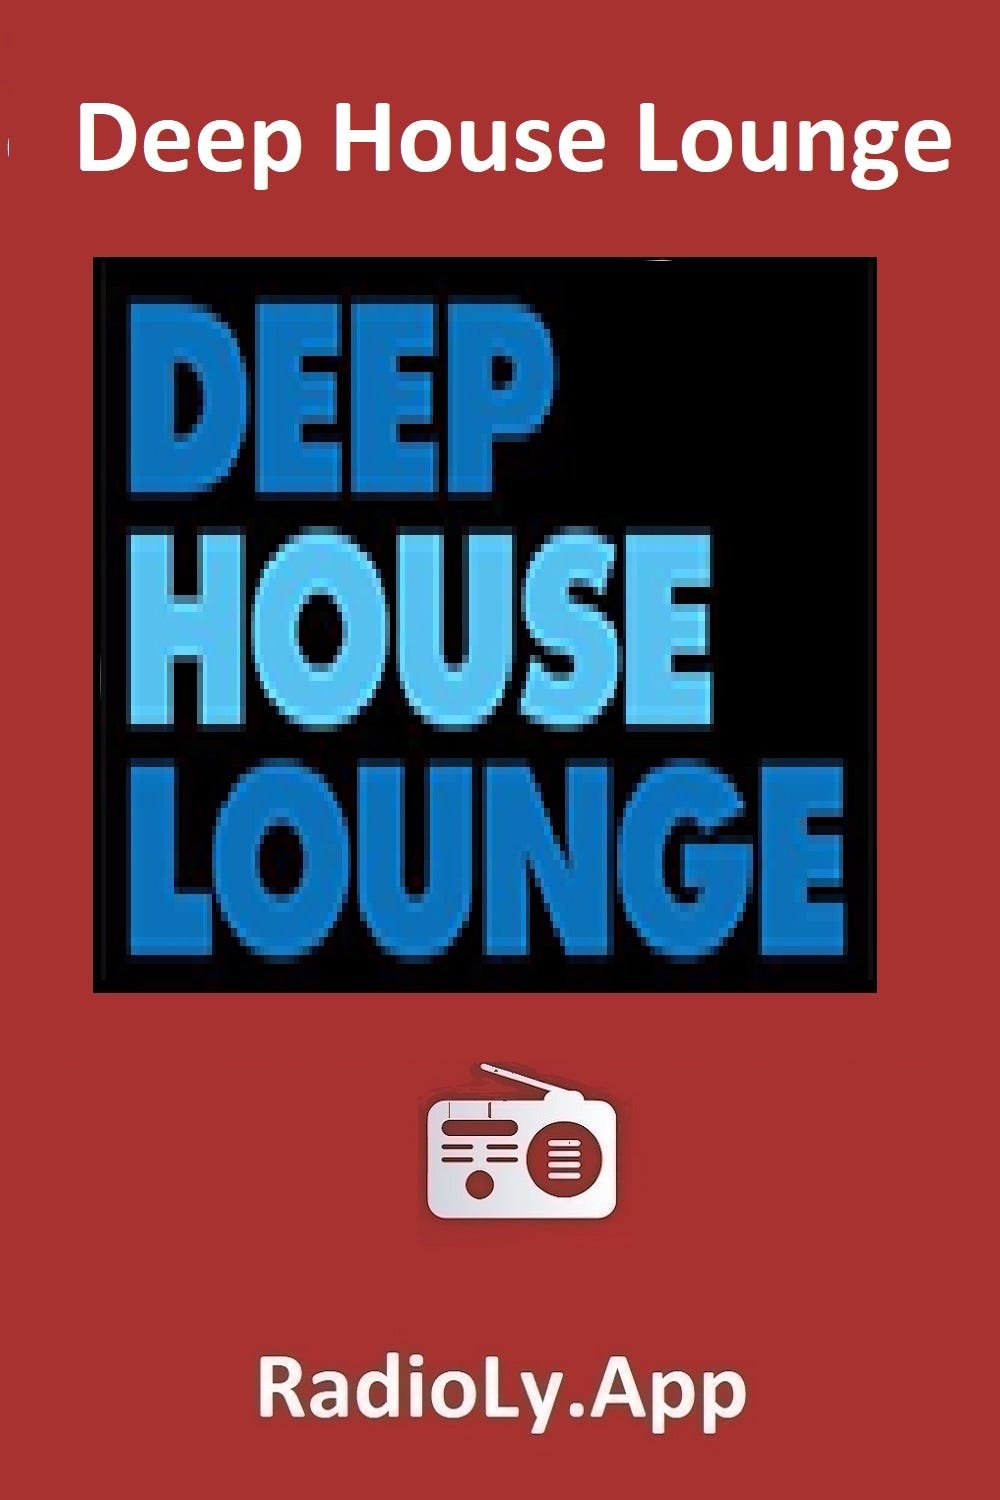 Deep House Lounge- USA Radio Station Online — RadiolyApp - Radioly - Medium